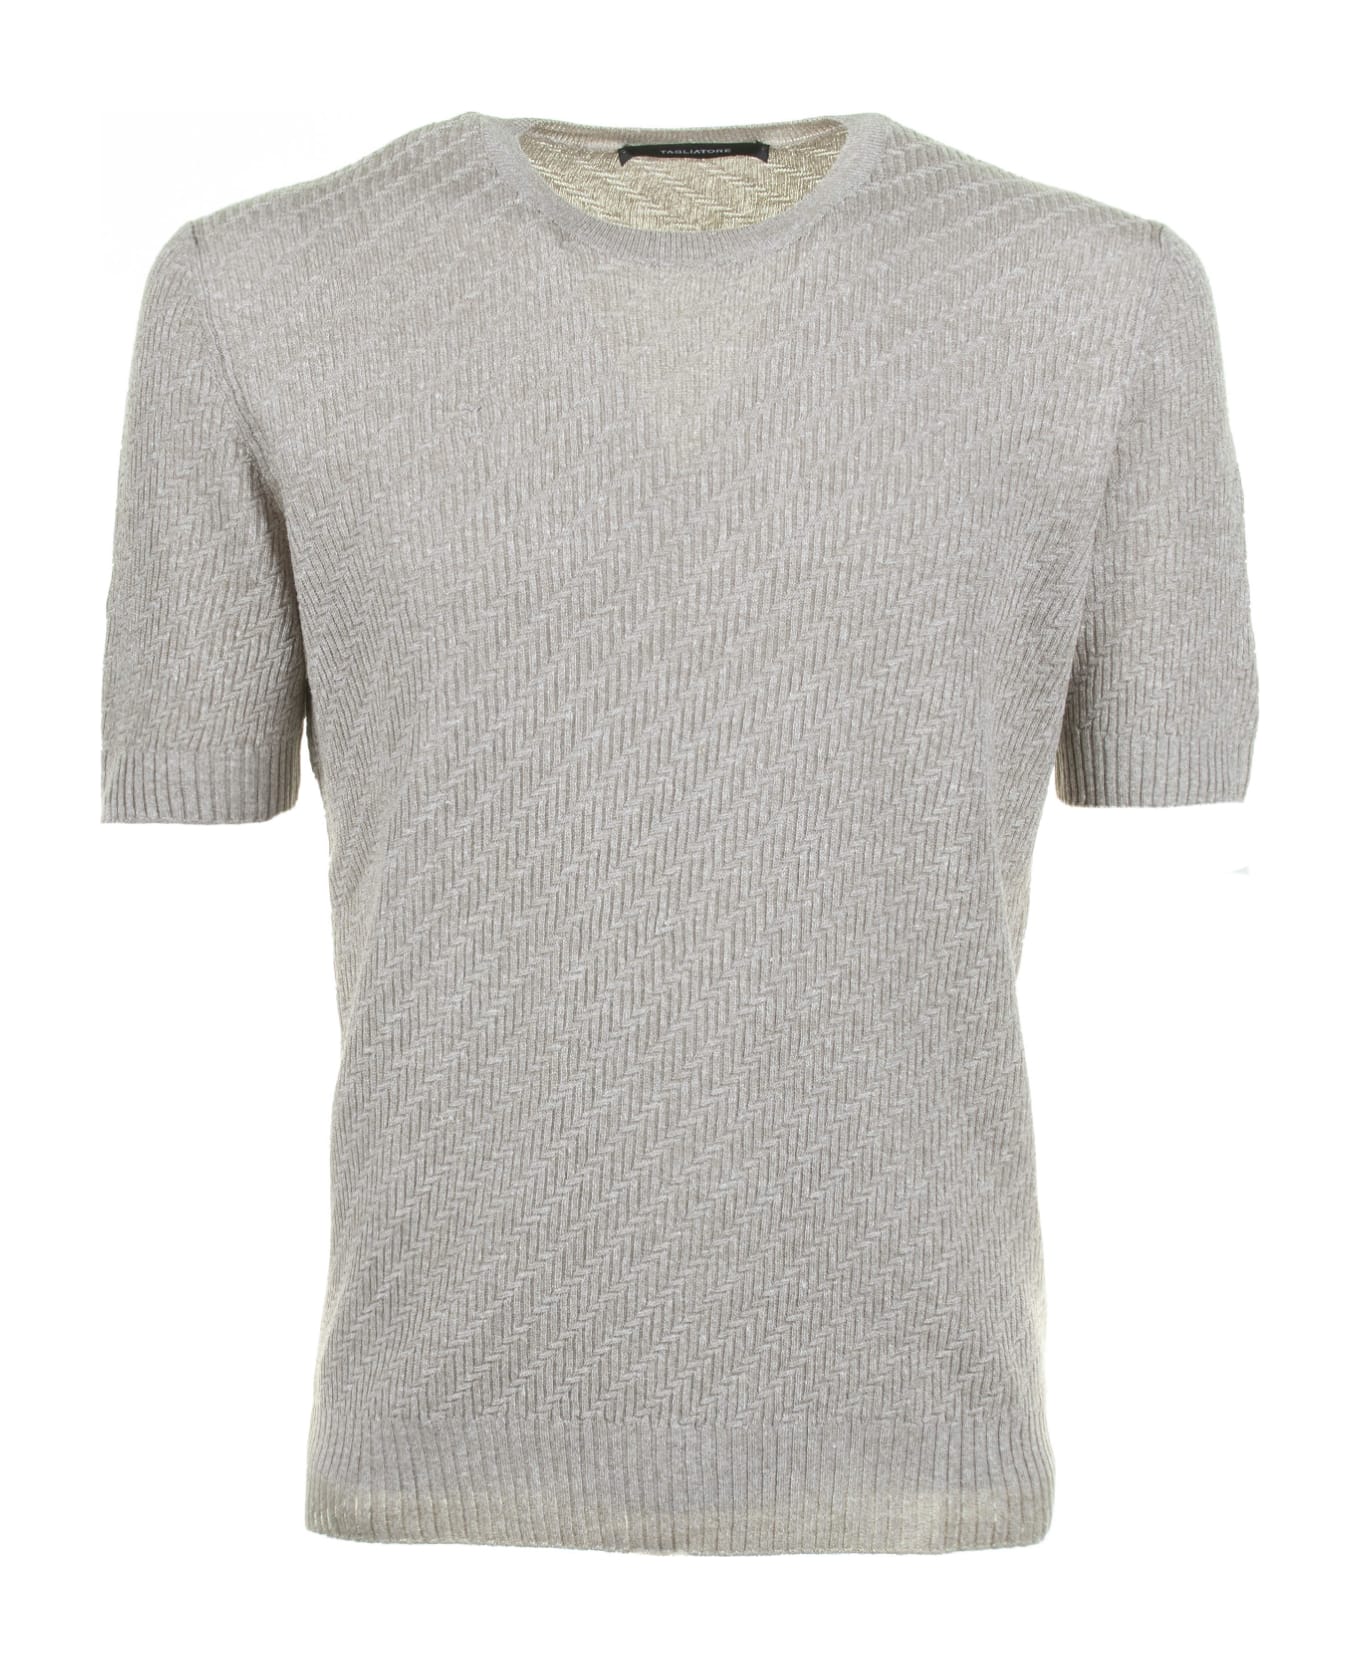 Tagliatore Beige Knitted T-shirt - BEIGE